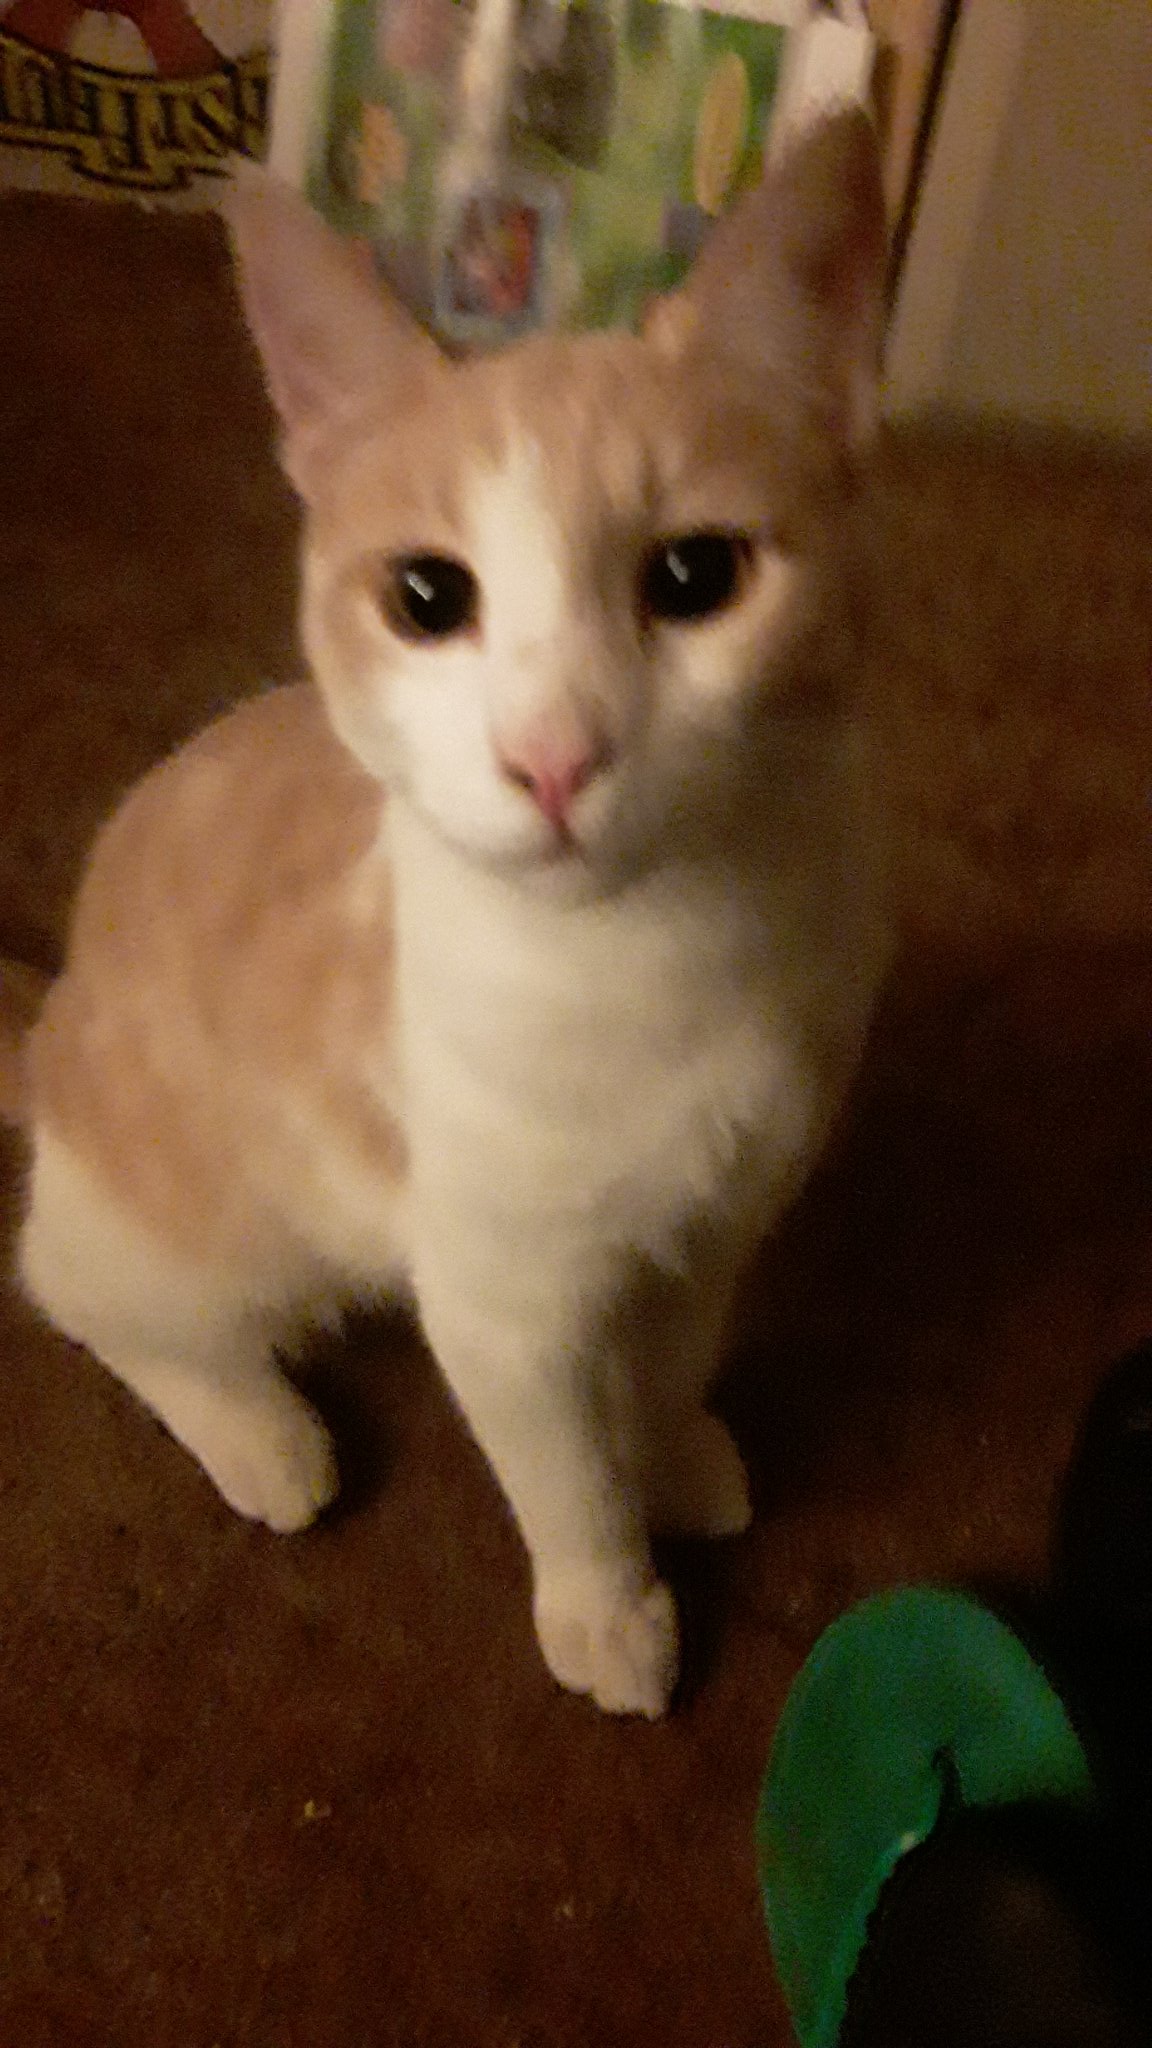  Happy birthday. My cat Snowhite greets you too. 